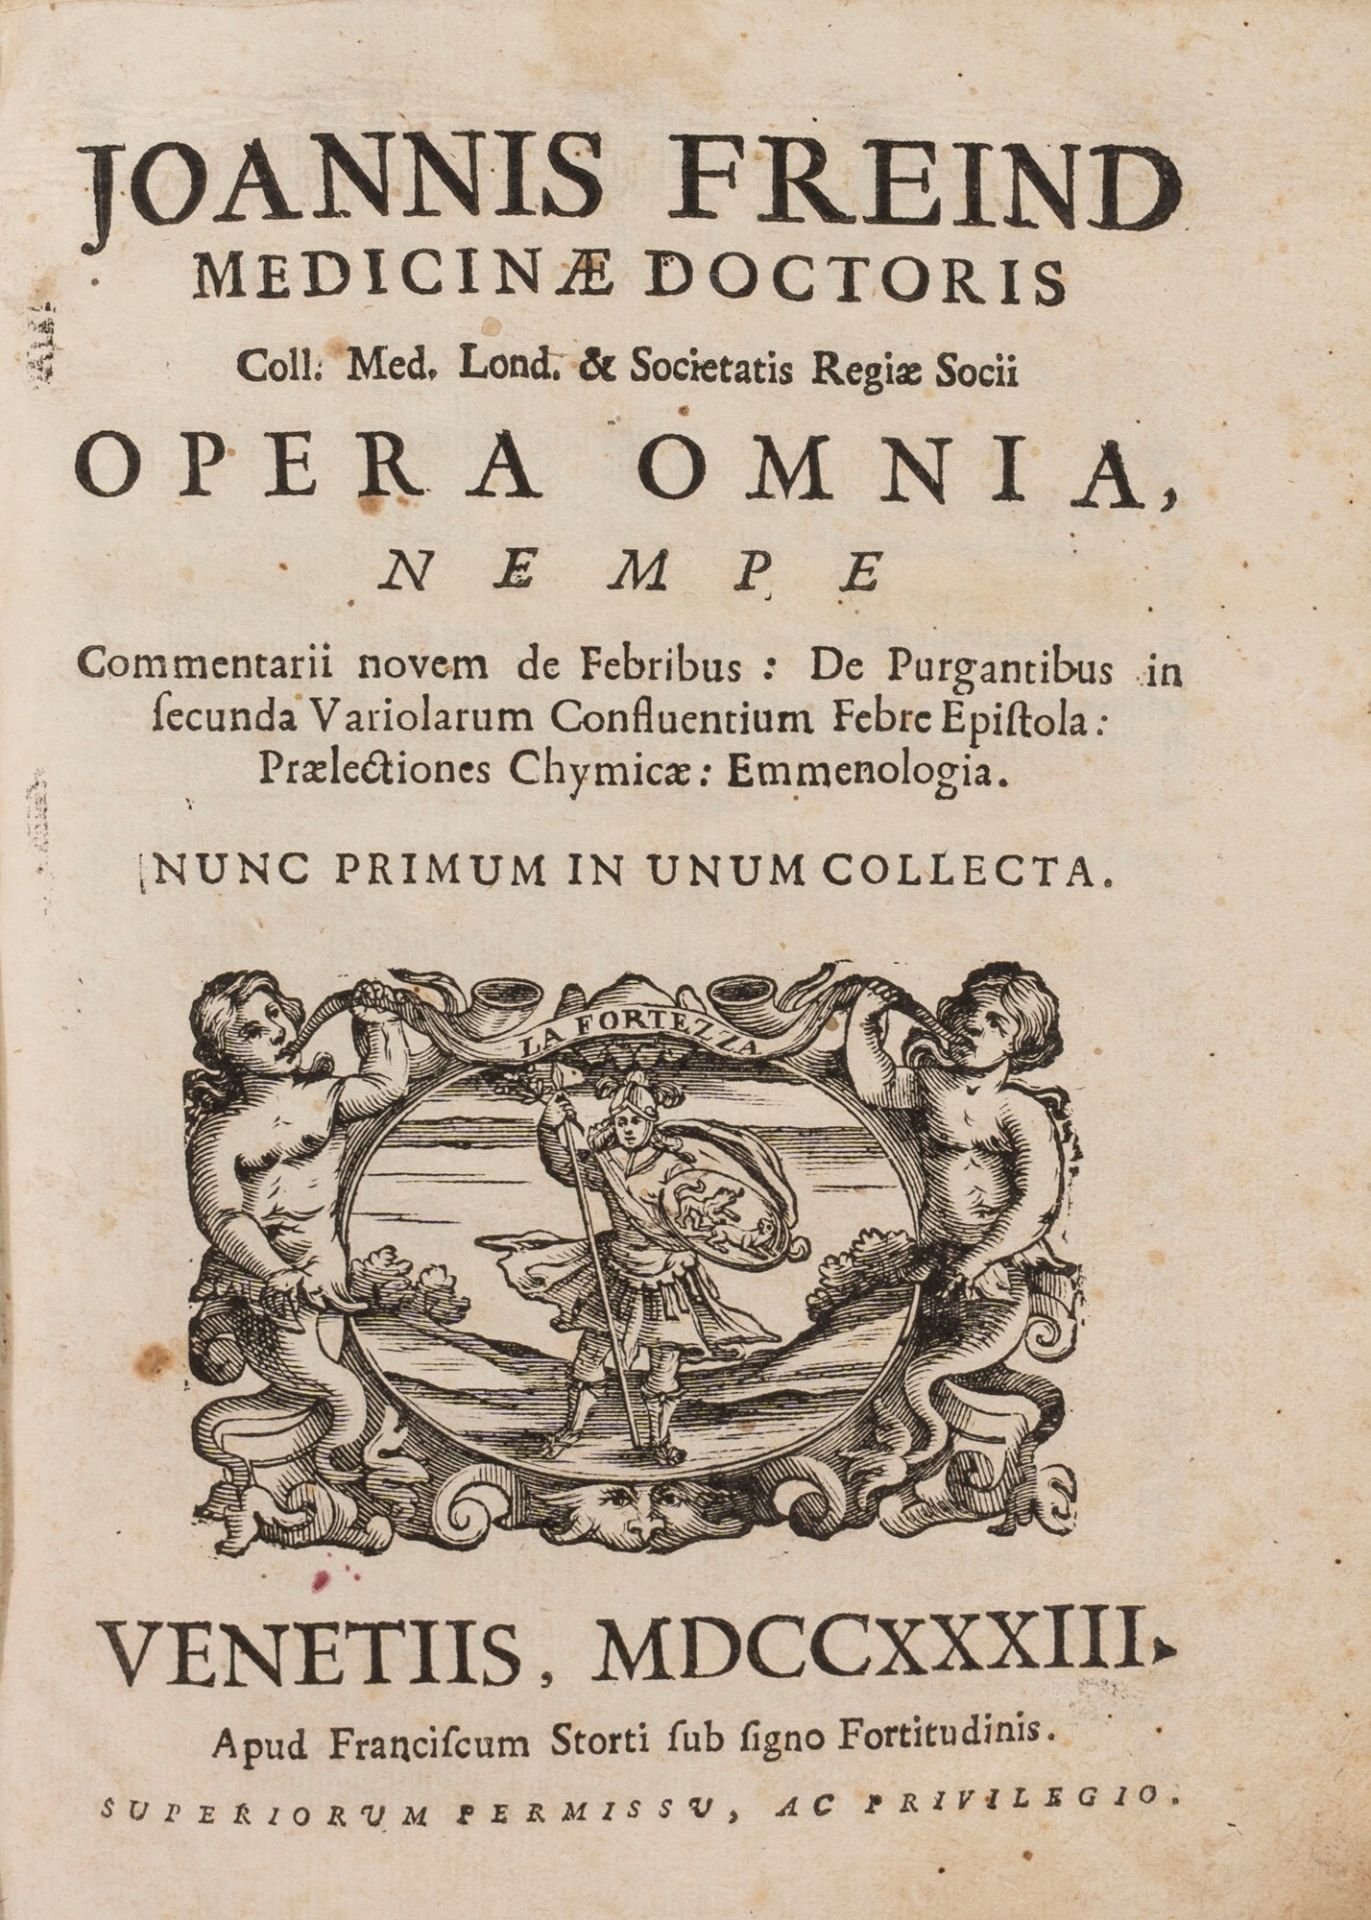 Medicine - Freind, John - Complete work, not Commentarii novem de febribus: De purgantibus in secund